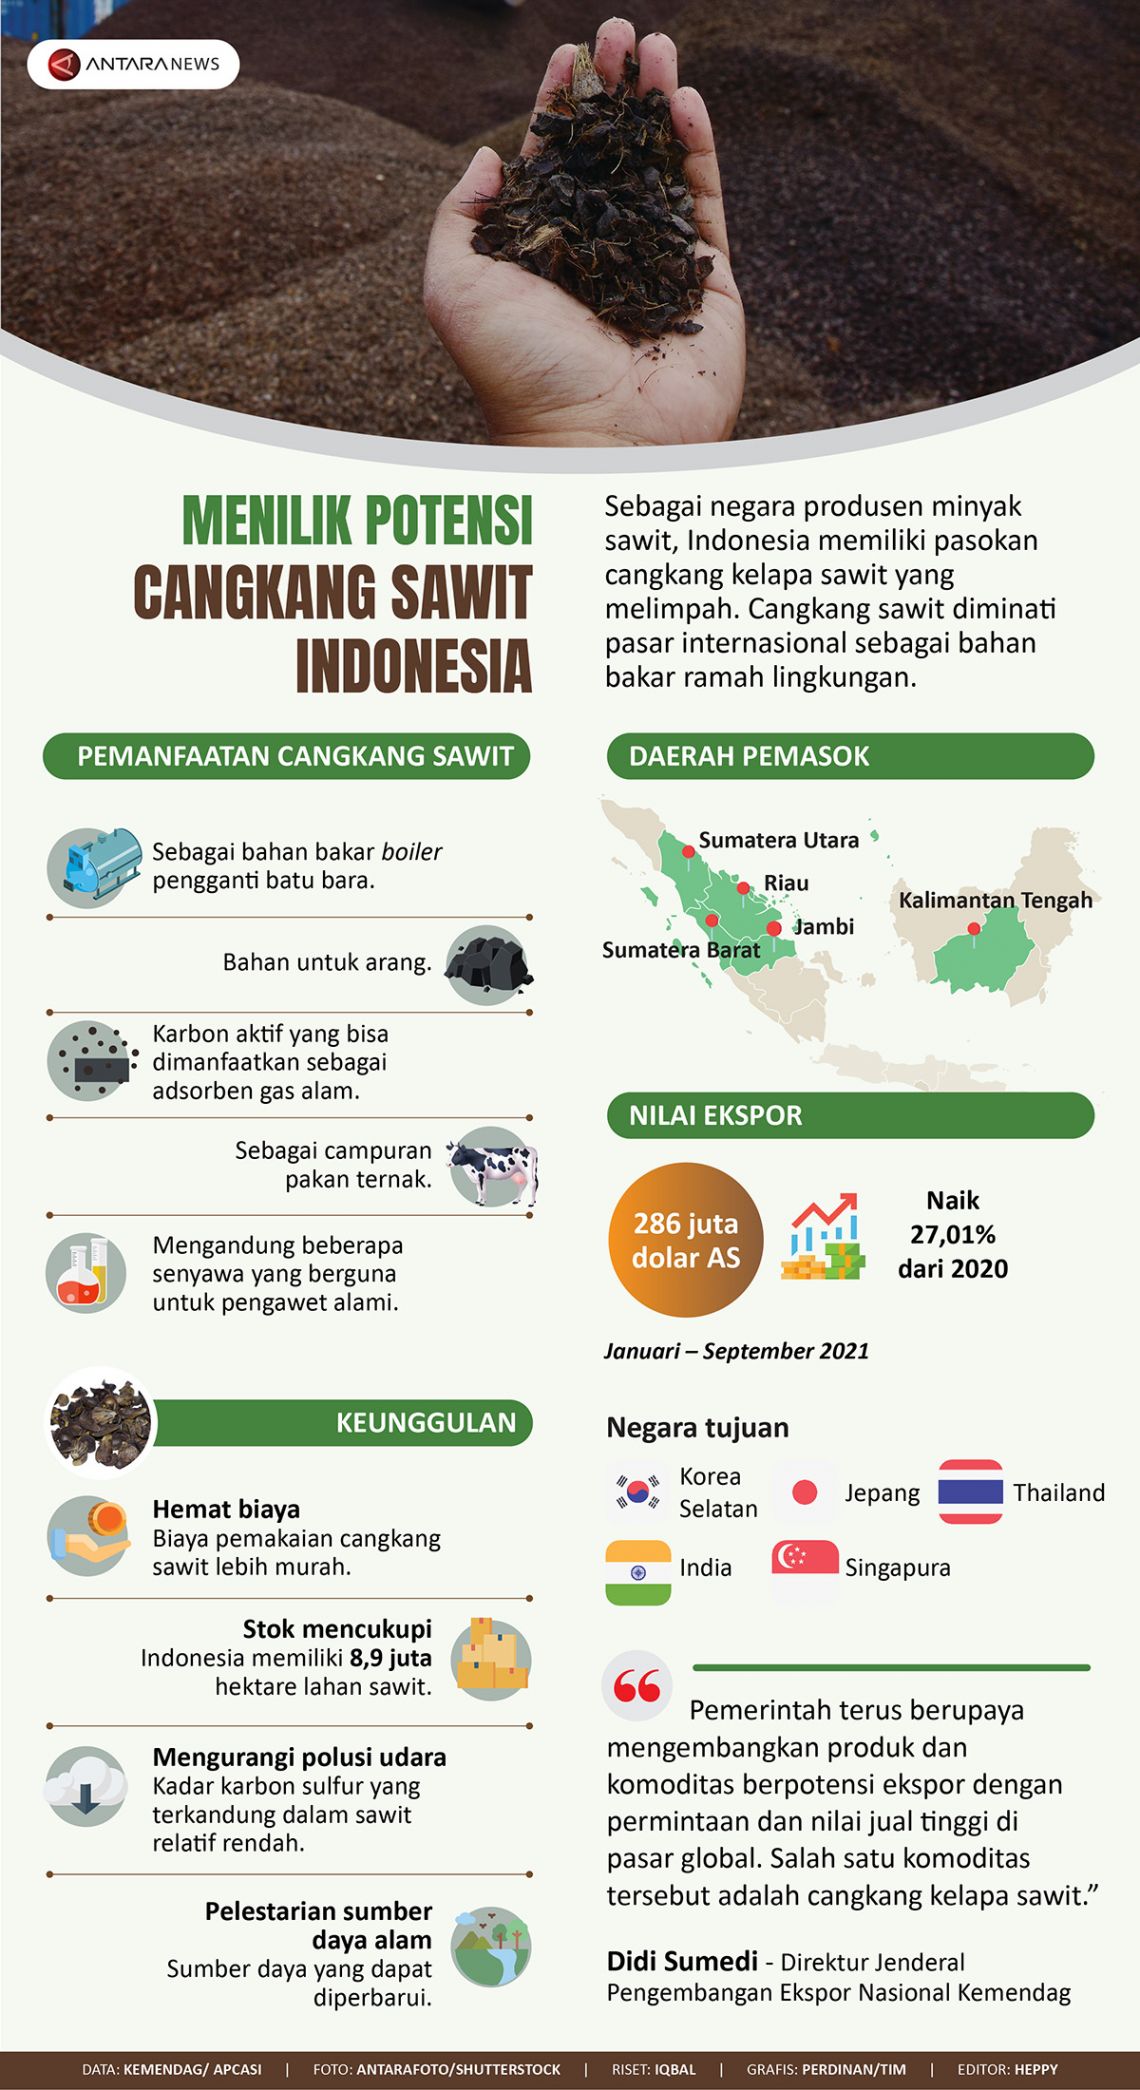 Menilik potensi cangkang sawit Indonesia